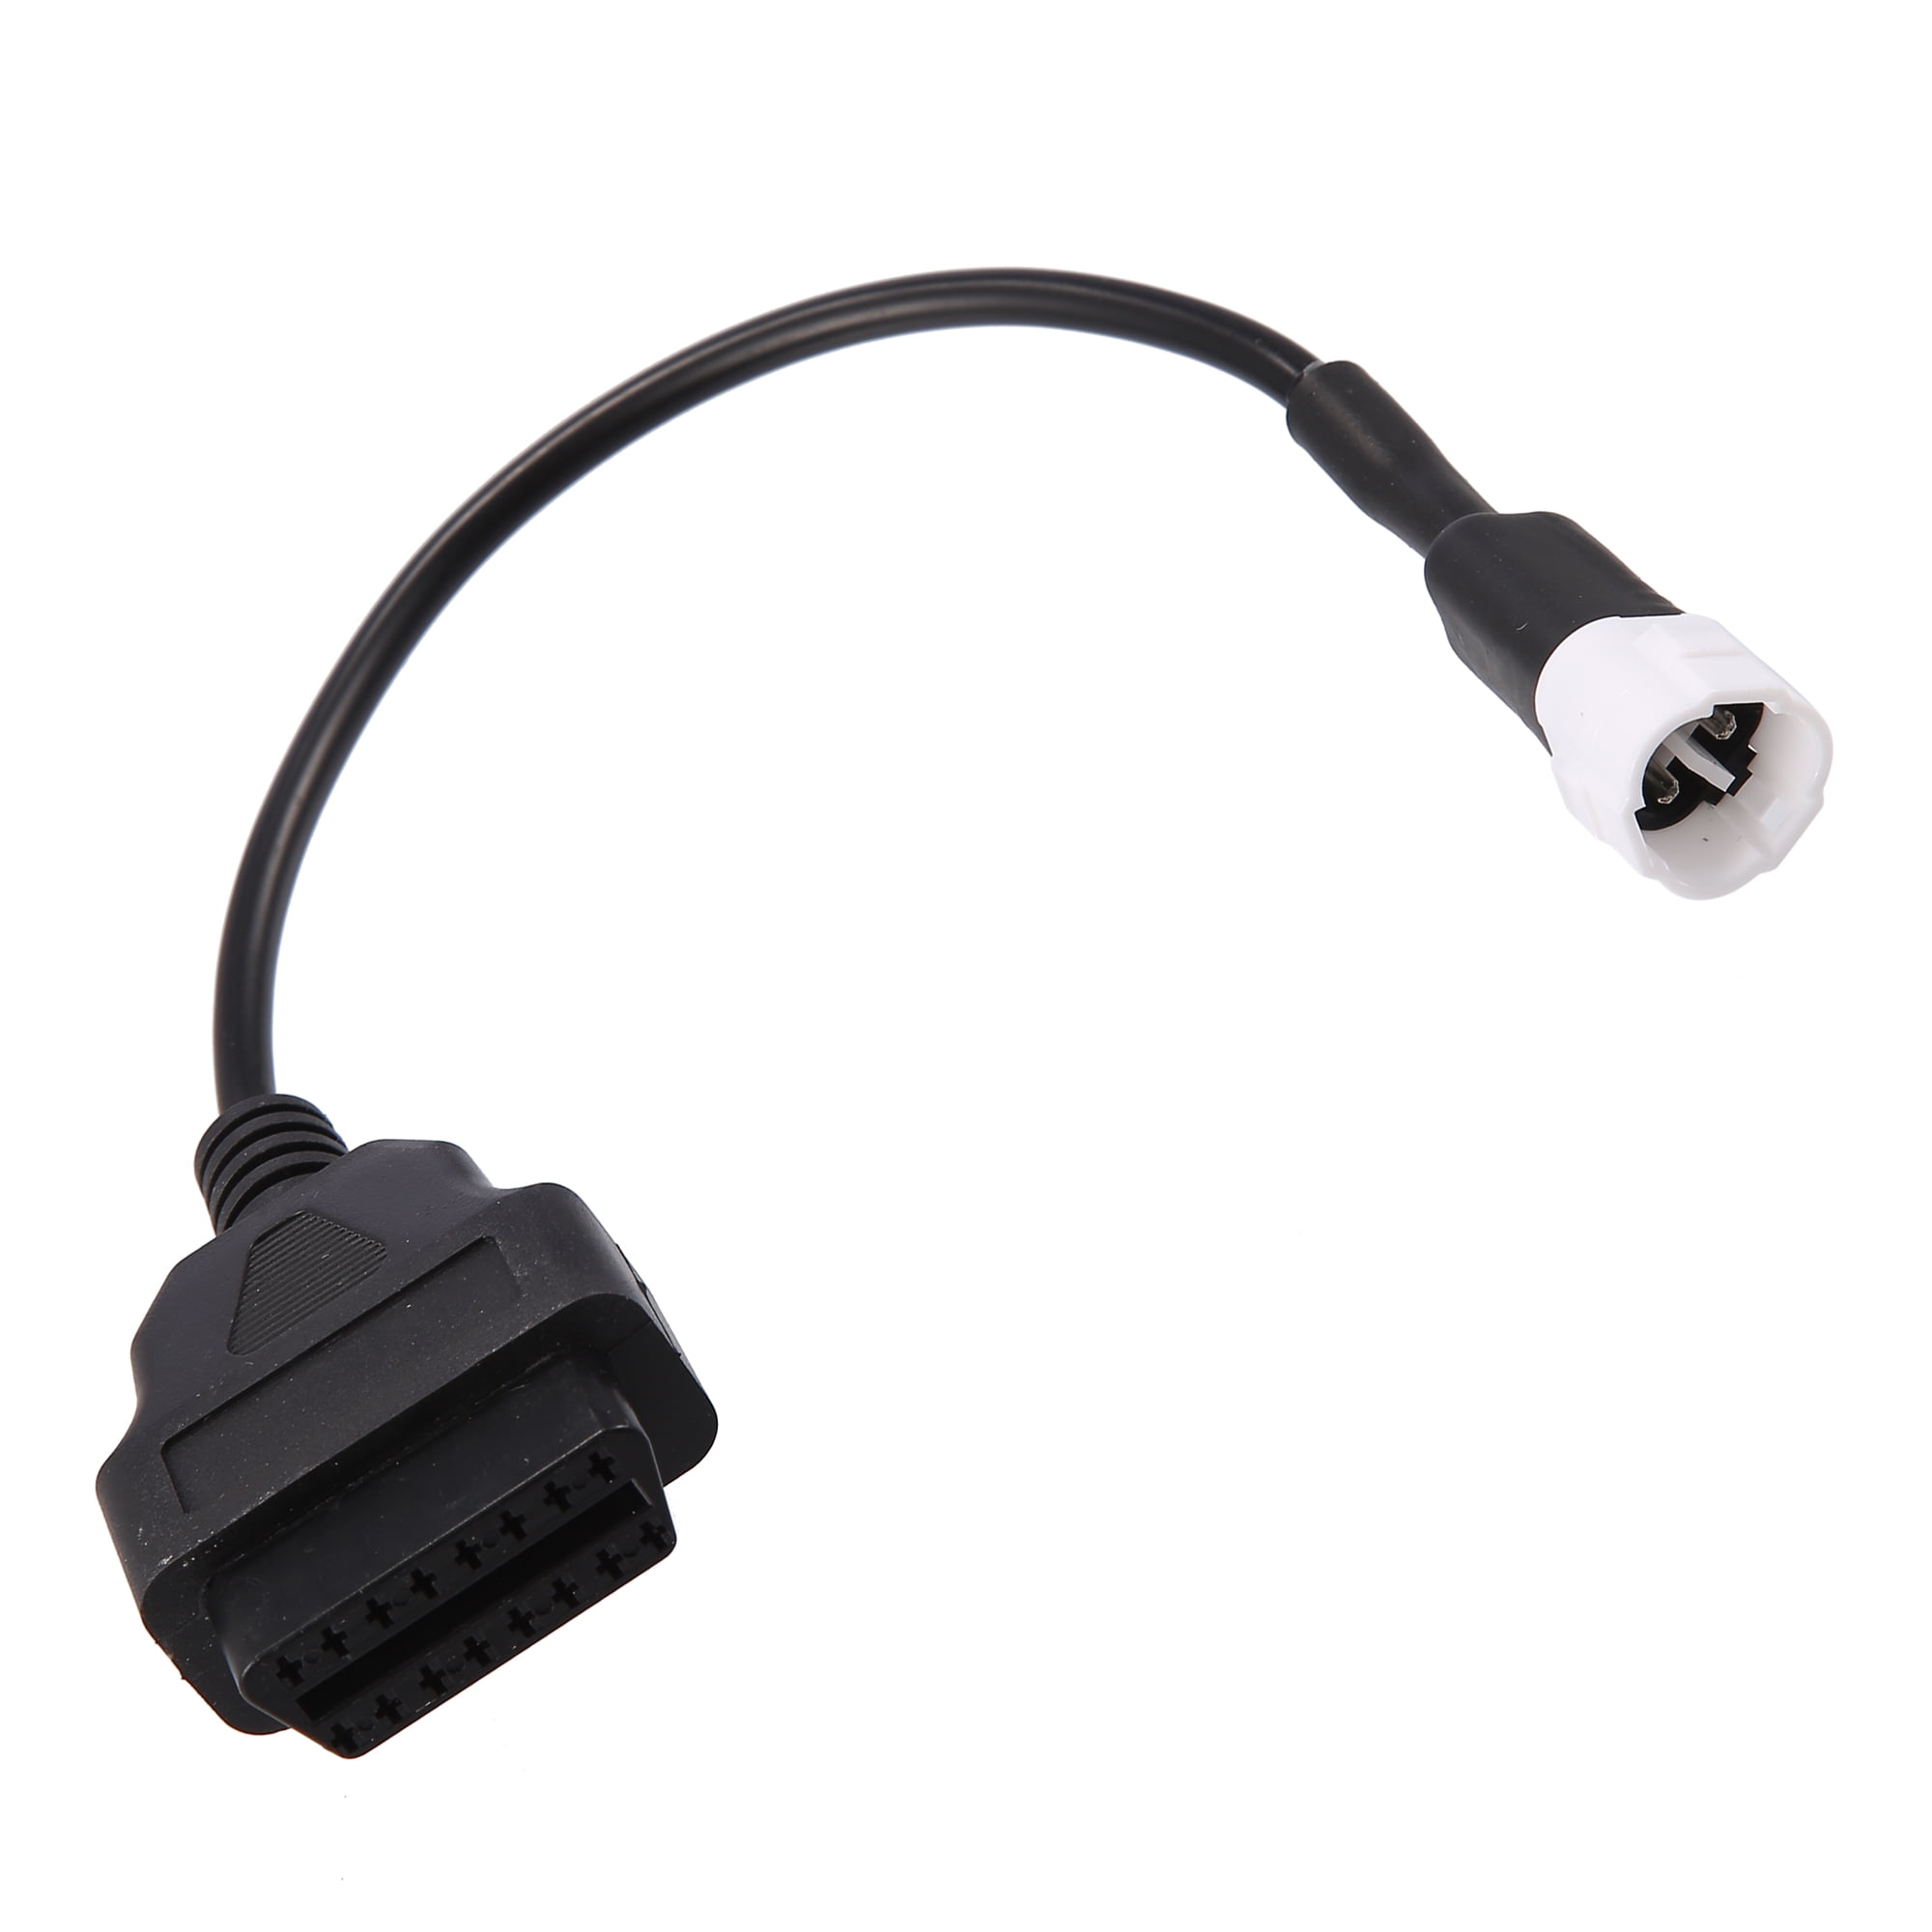 Unique Bargains 3 Pin to OBDII OBD Cable Cord Diagnostic Adapter